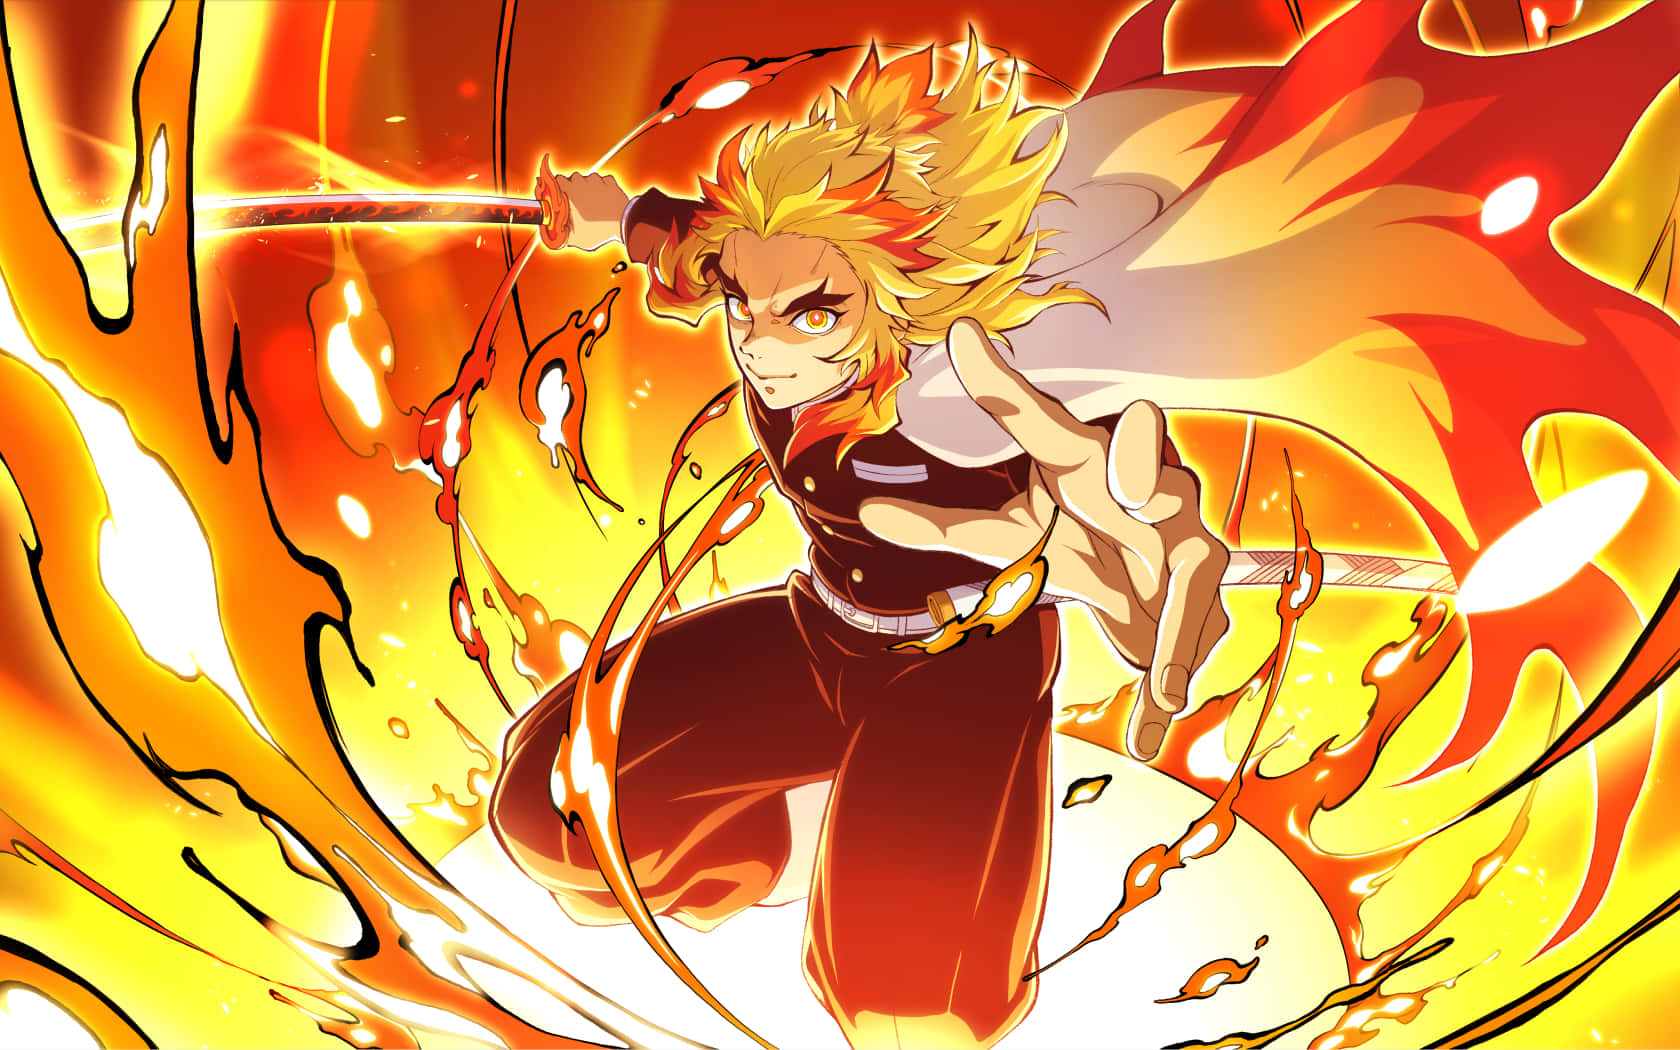 The fierce Rengoku, Flame Hashira of the Demon Slayer Corps